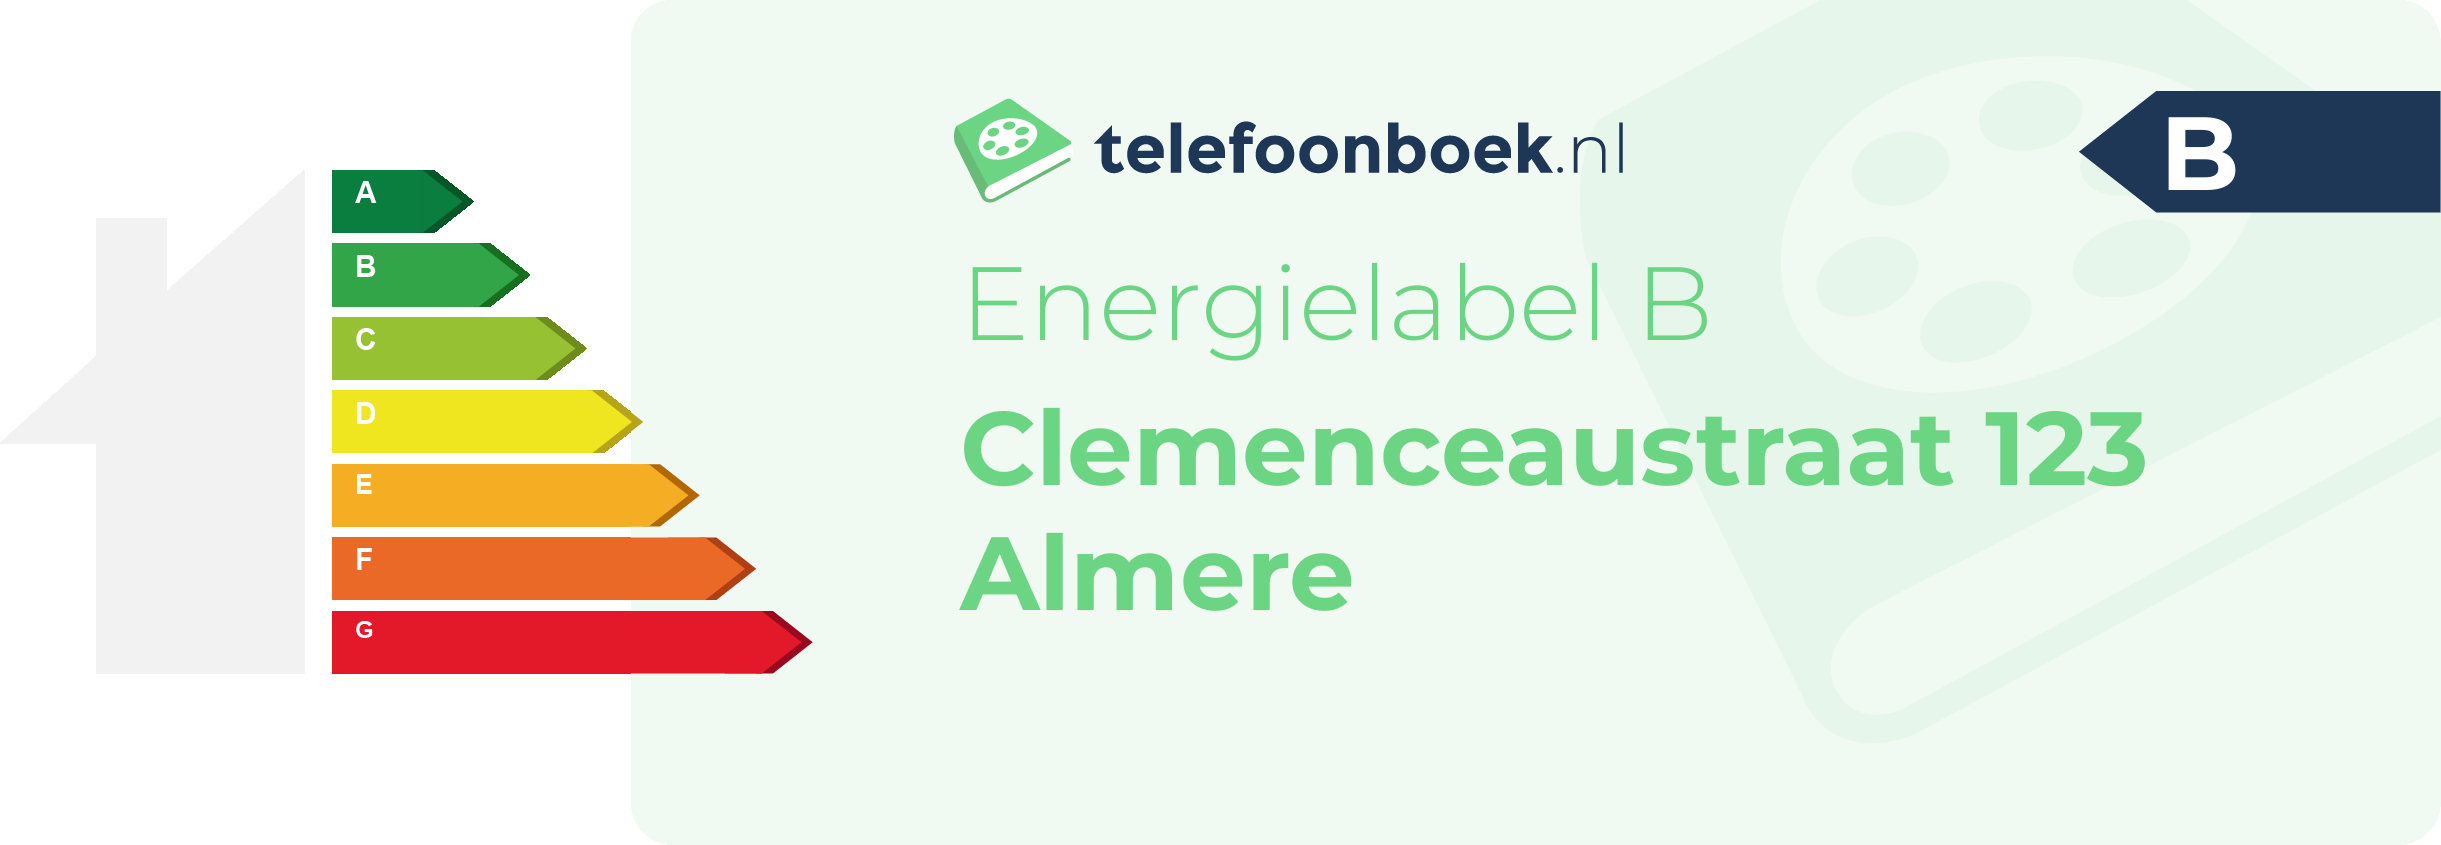 Energielabel Clemenceaustraat 123 Almere